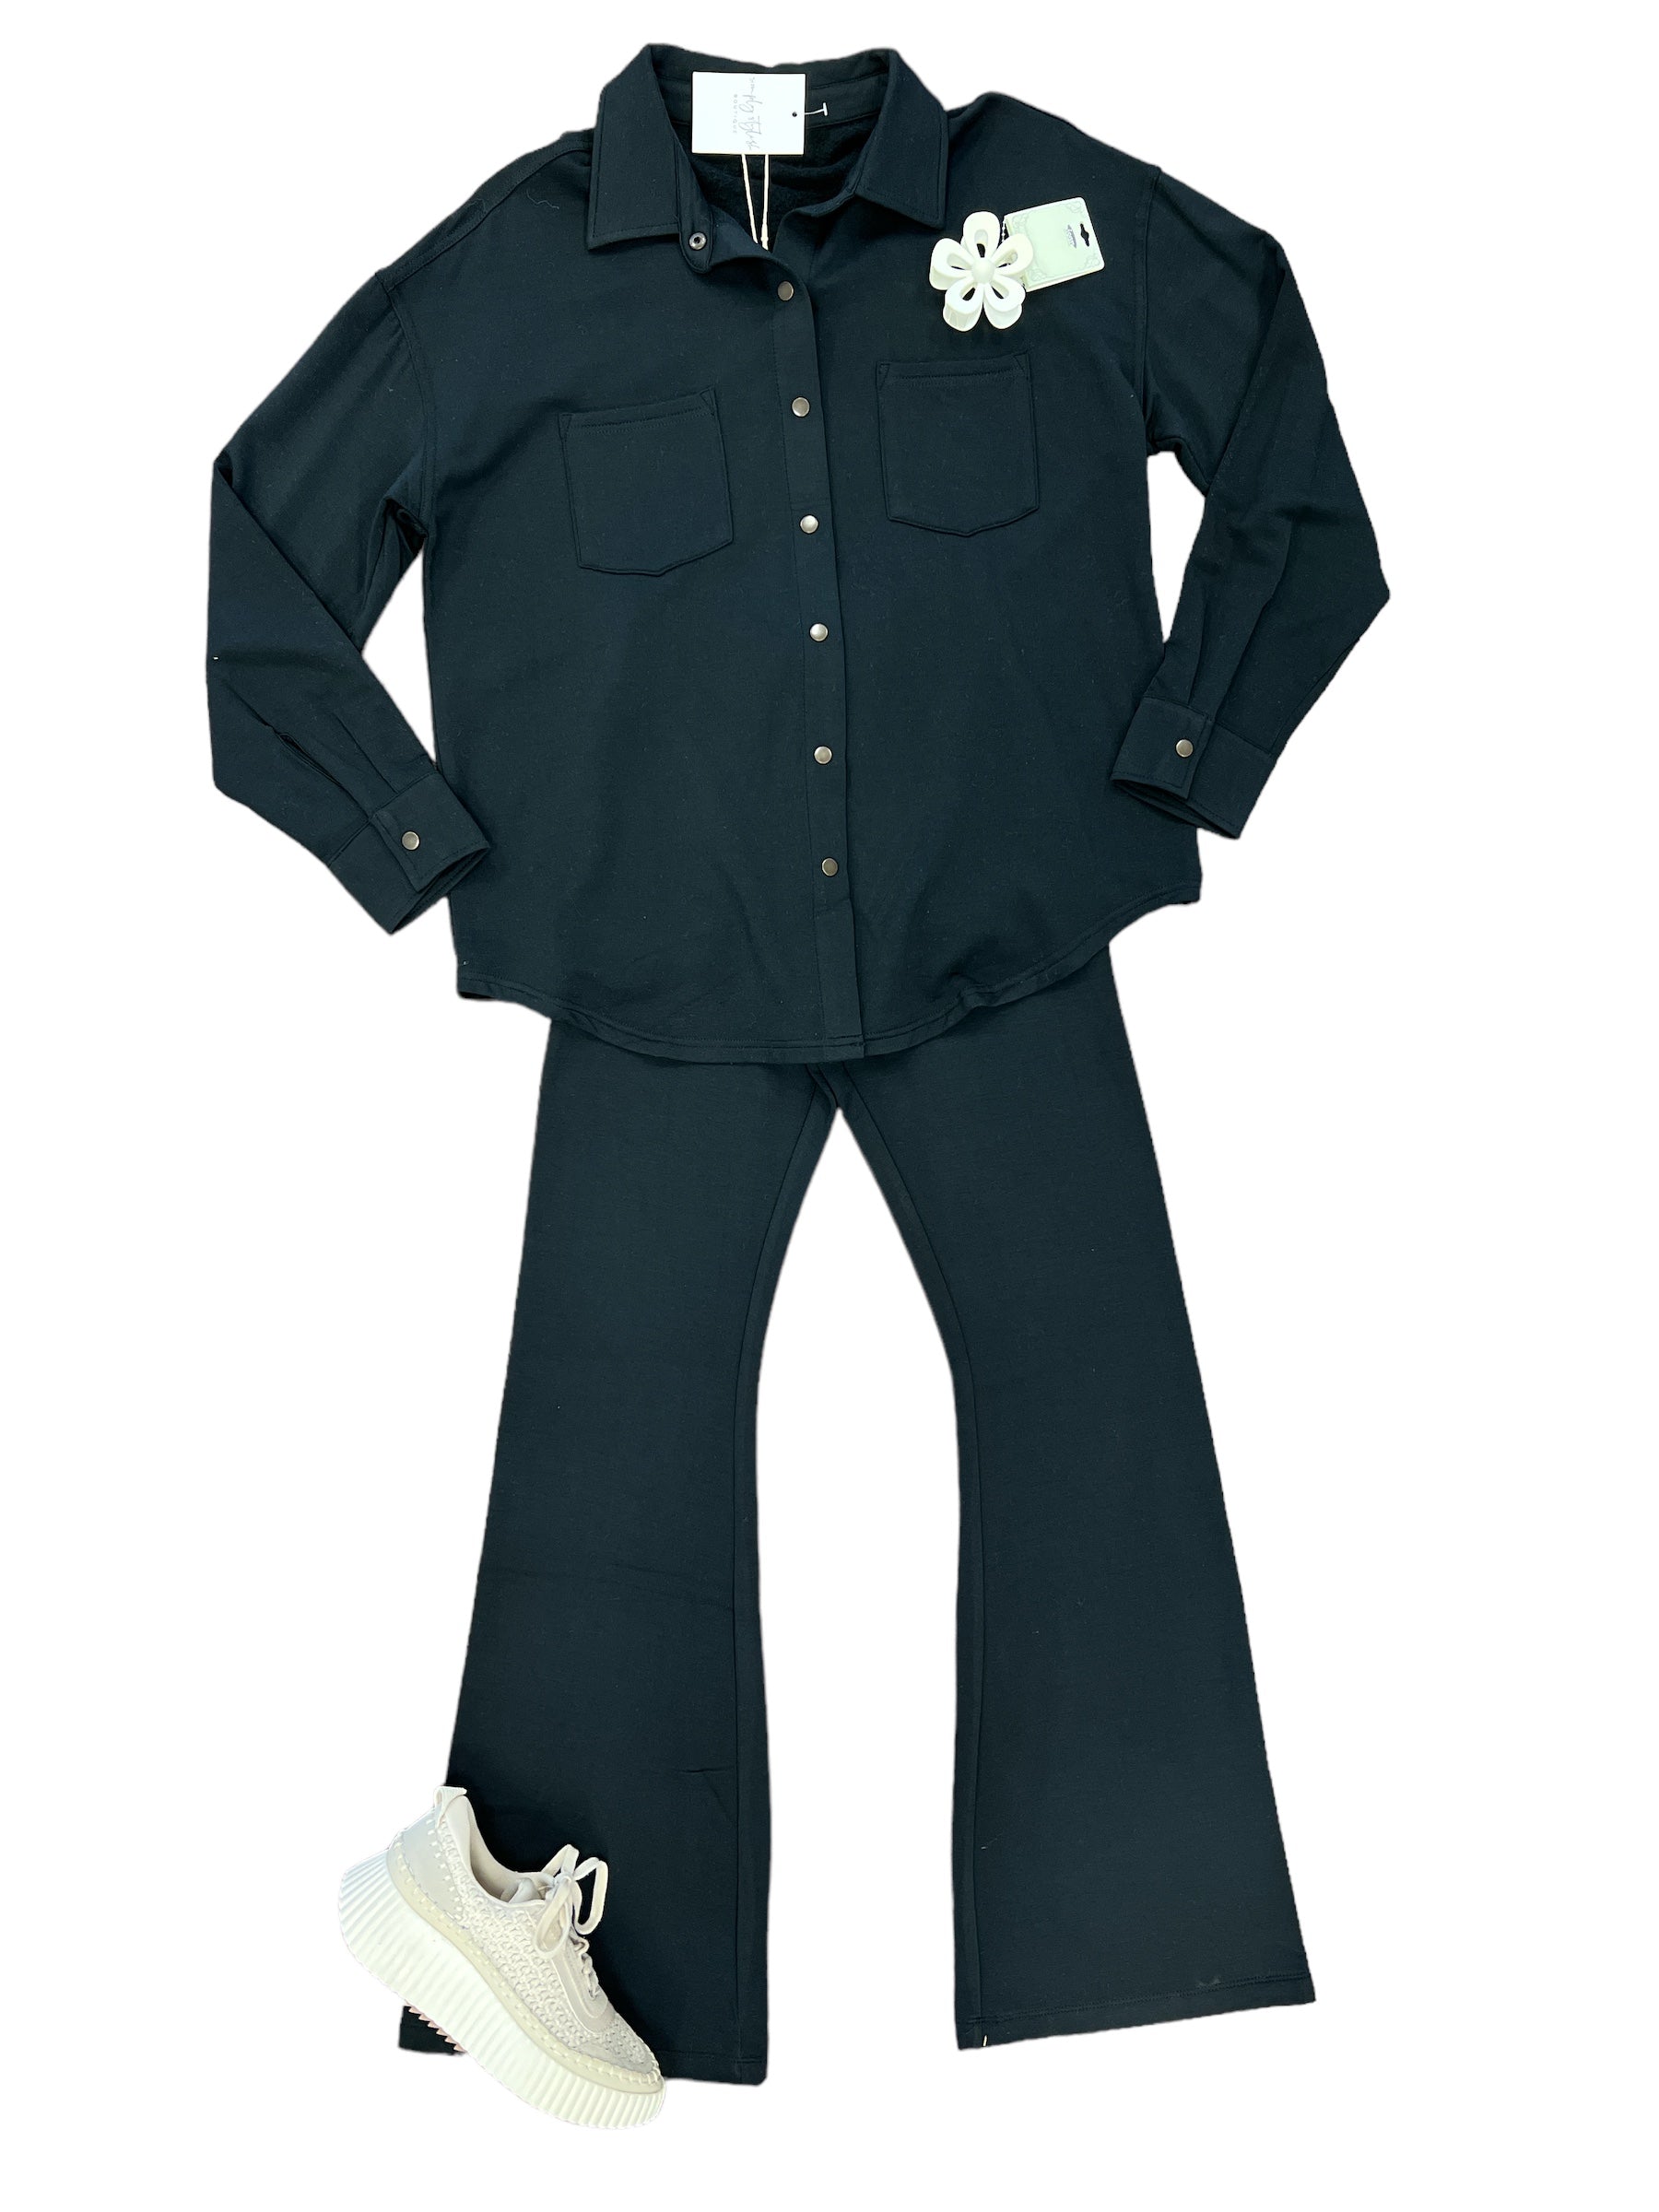 Everyday Modal Flare Pant-230 Pants-Simply Stylish Boutique-Simply Stylish Boutique | Women’s & Kid’s Fashion | Paducah, KY